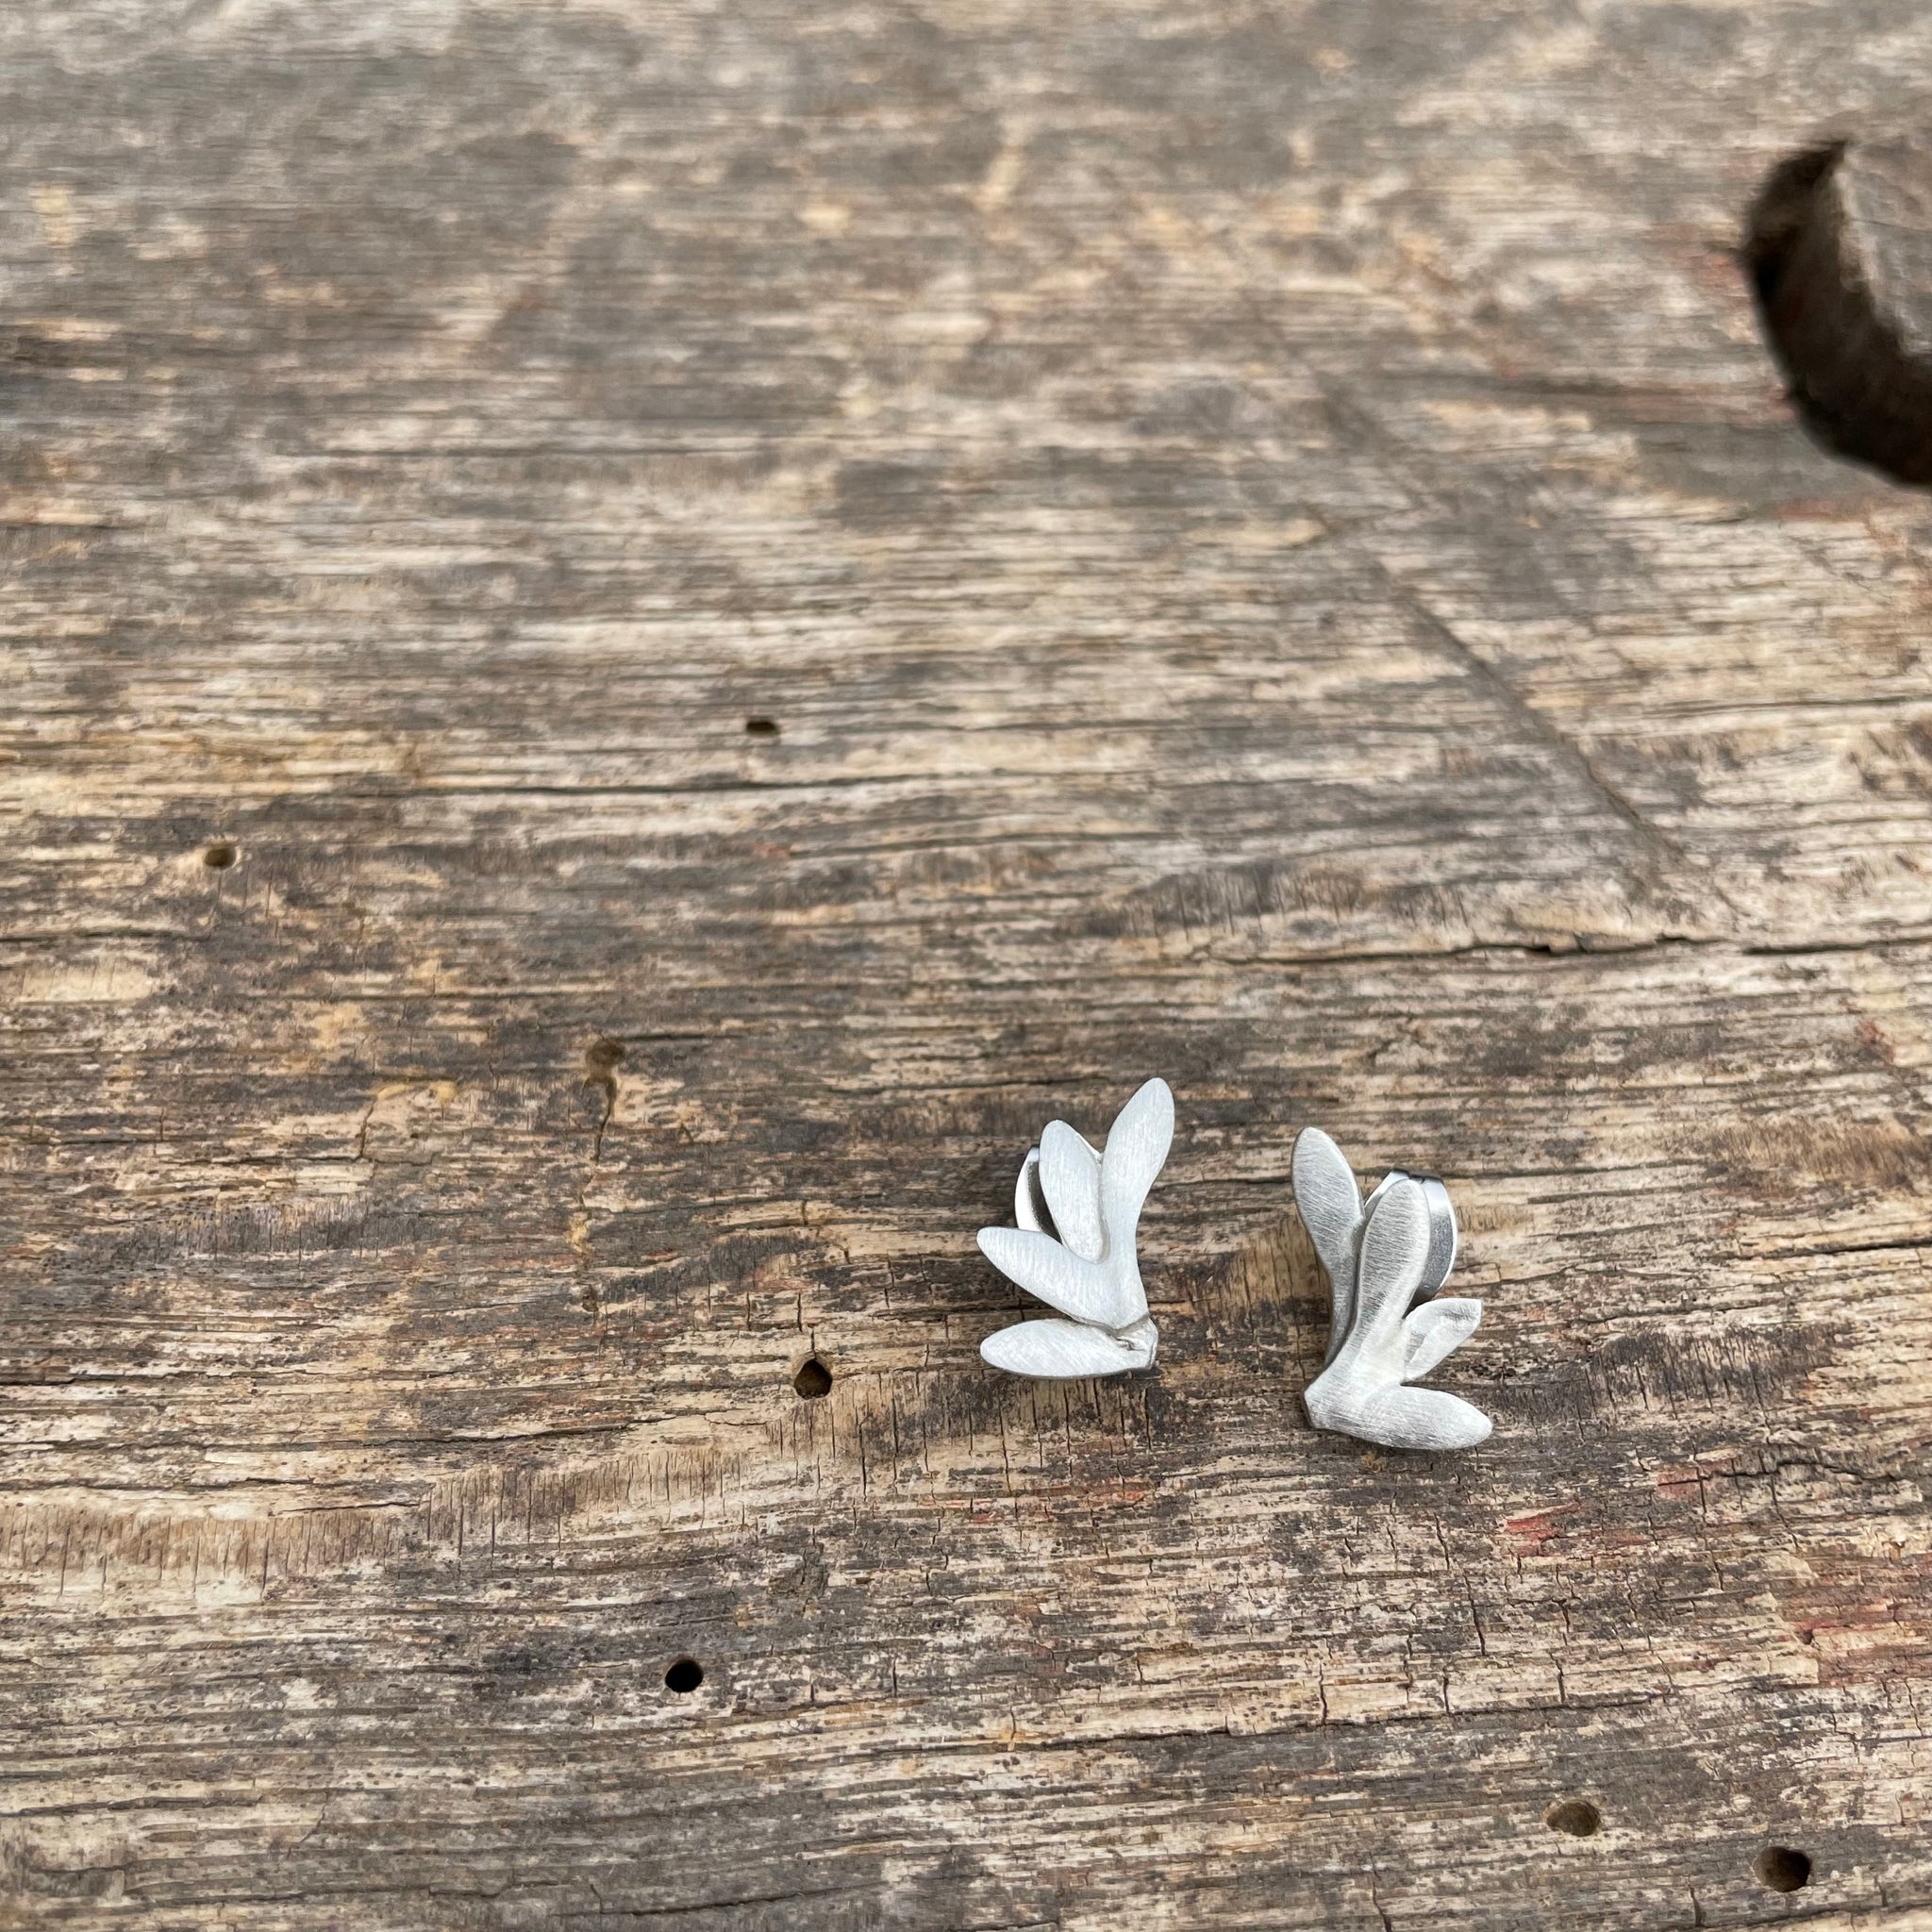 Little Wings Post Earrings by Blacking Metals